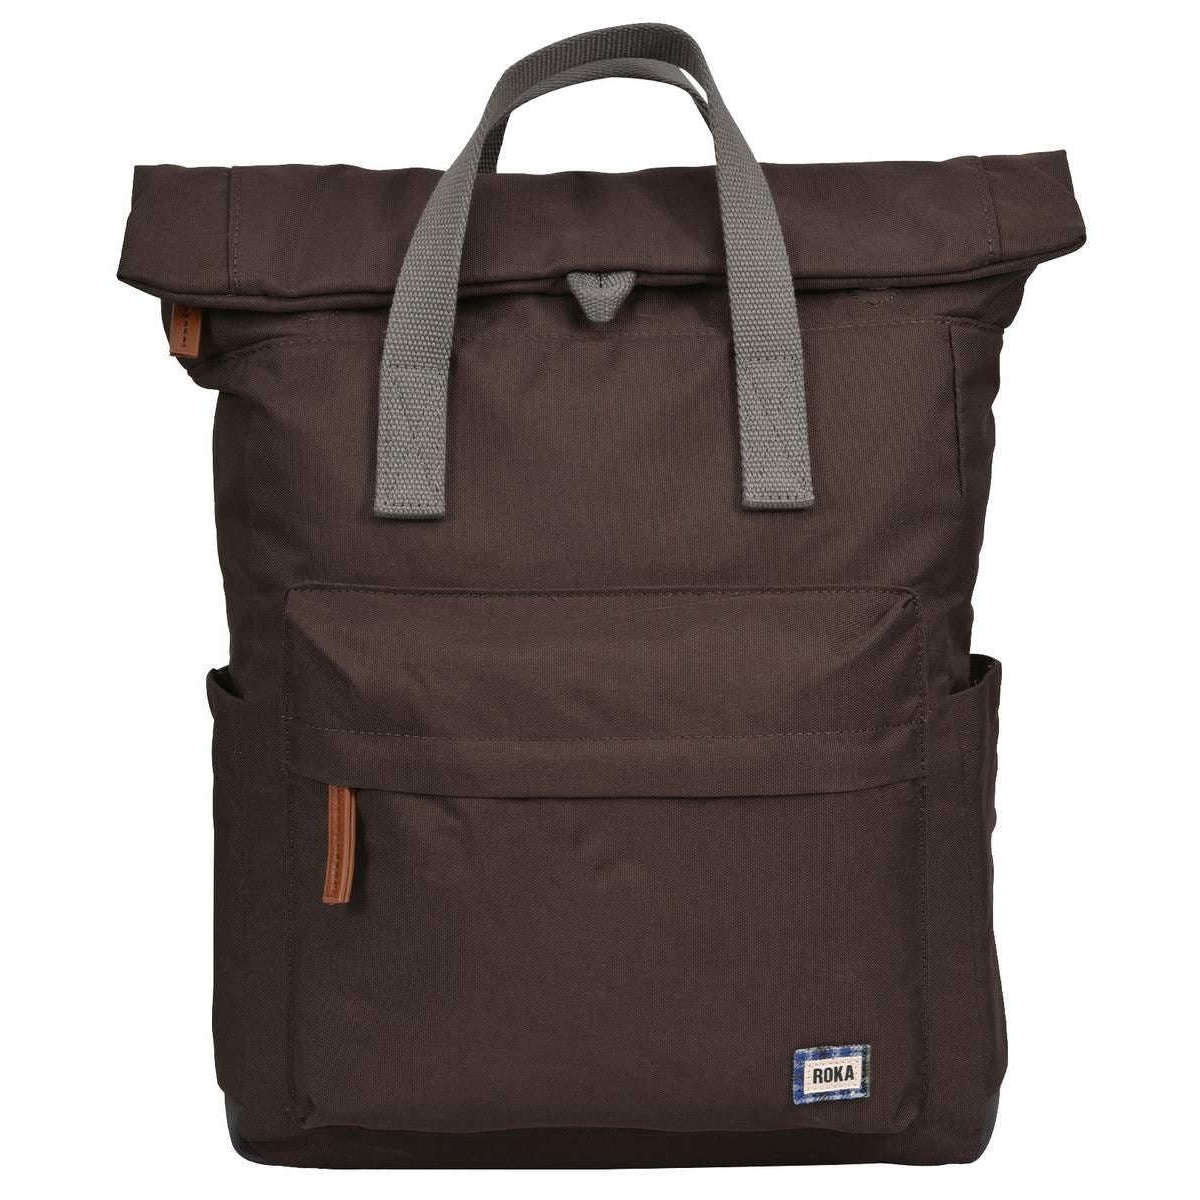 Roka Canfield B Medium Sustainable Canvas Flannel Backpack - Dark Chocolate Brown